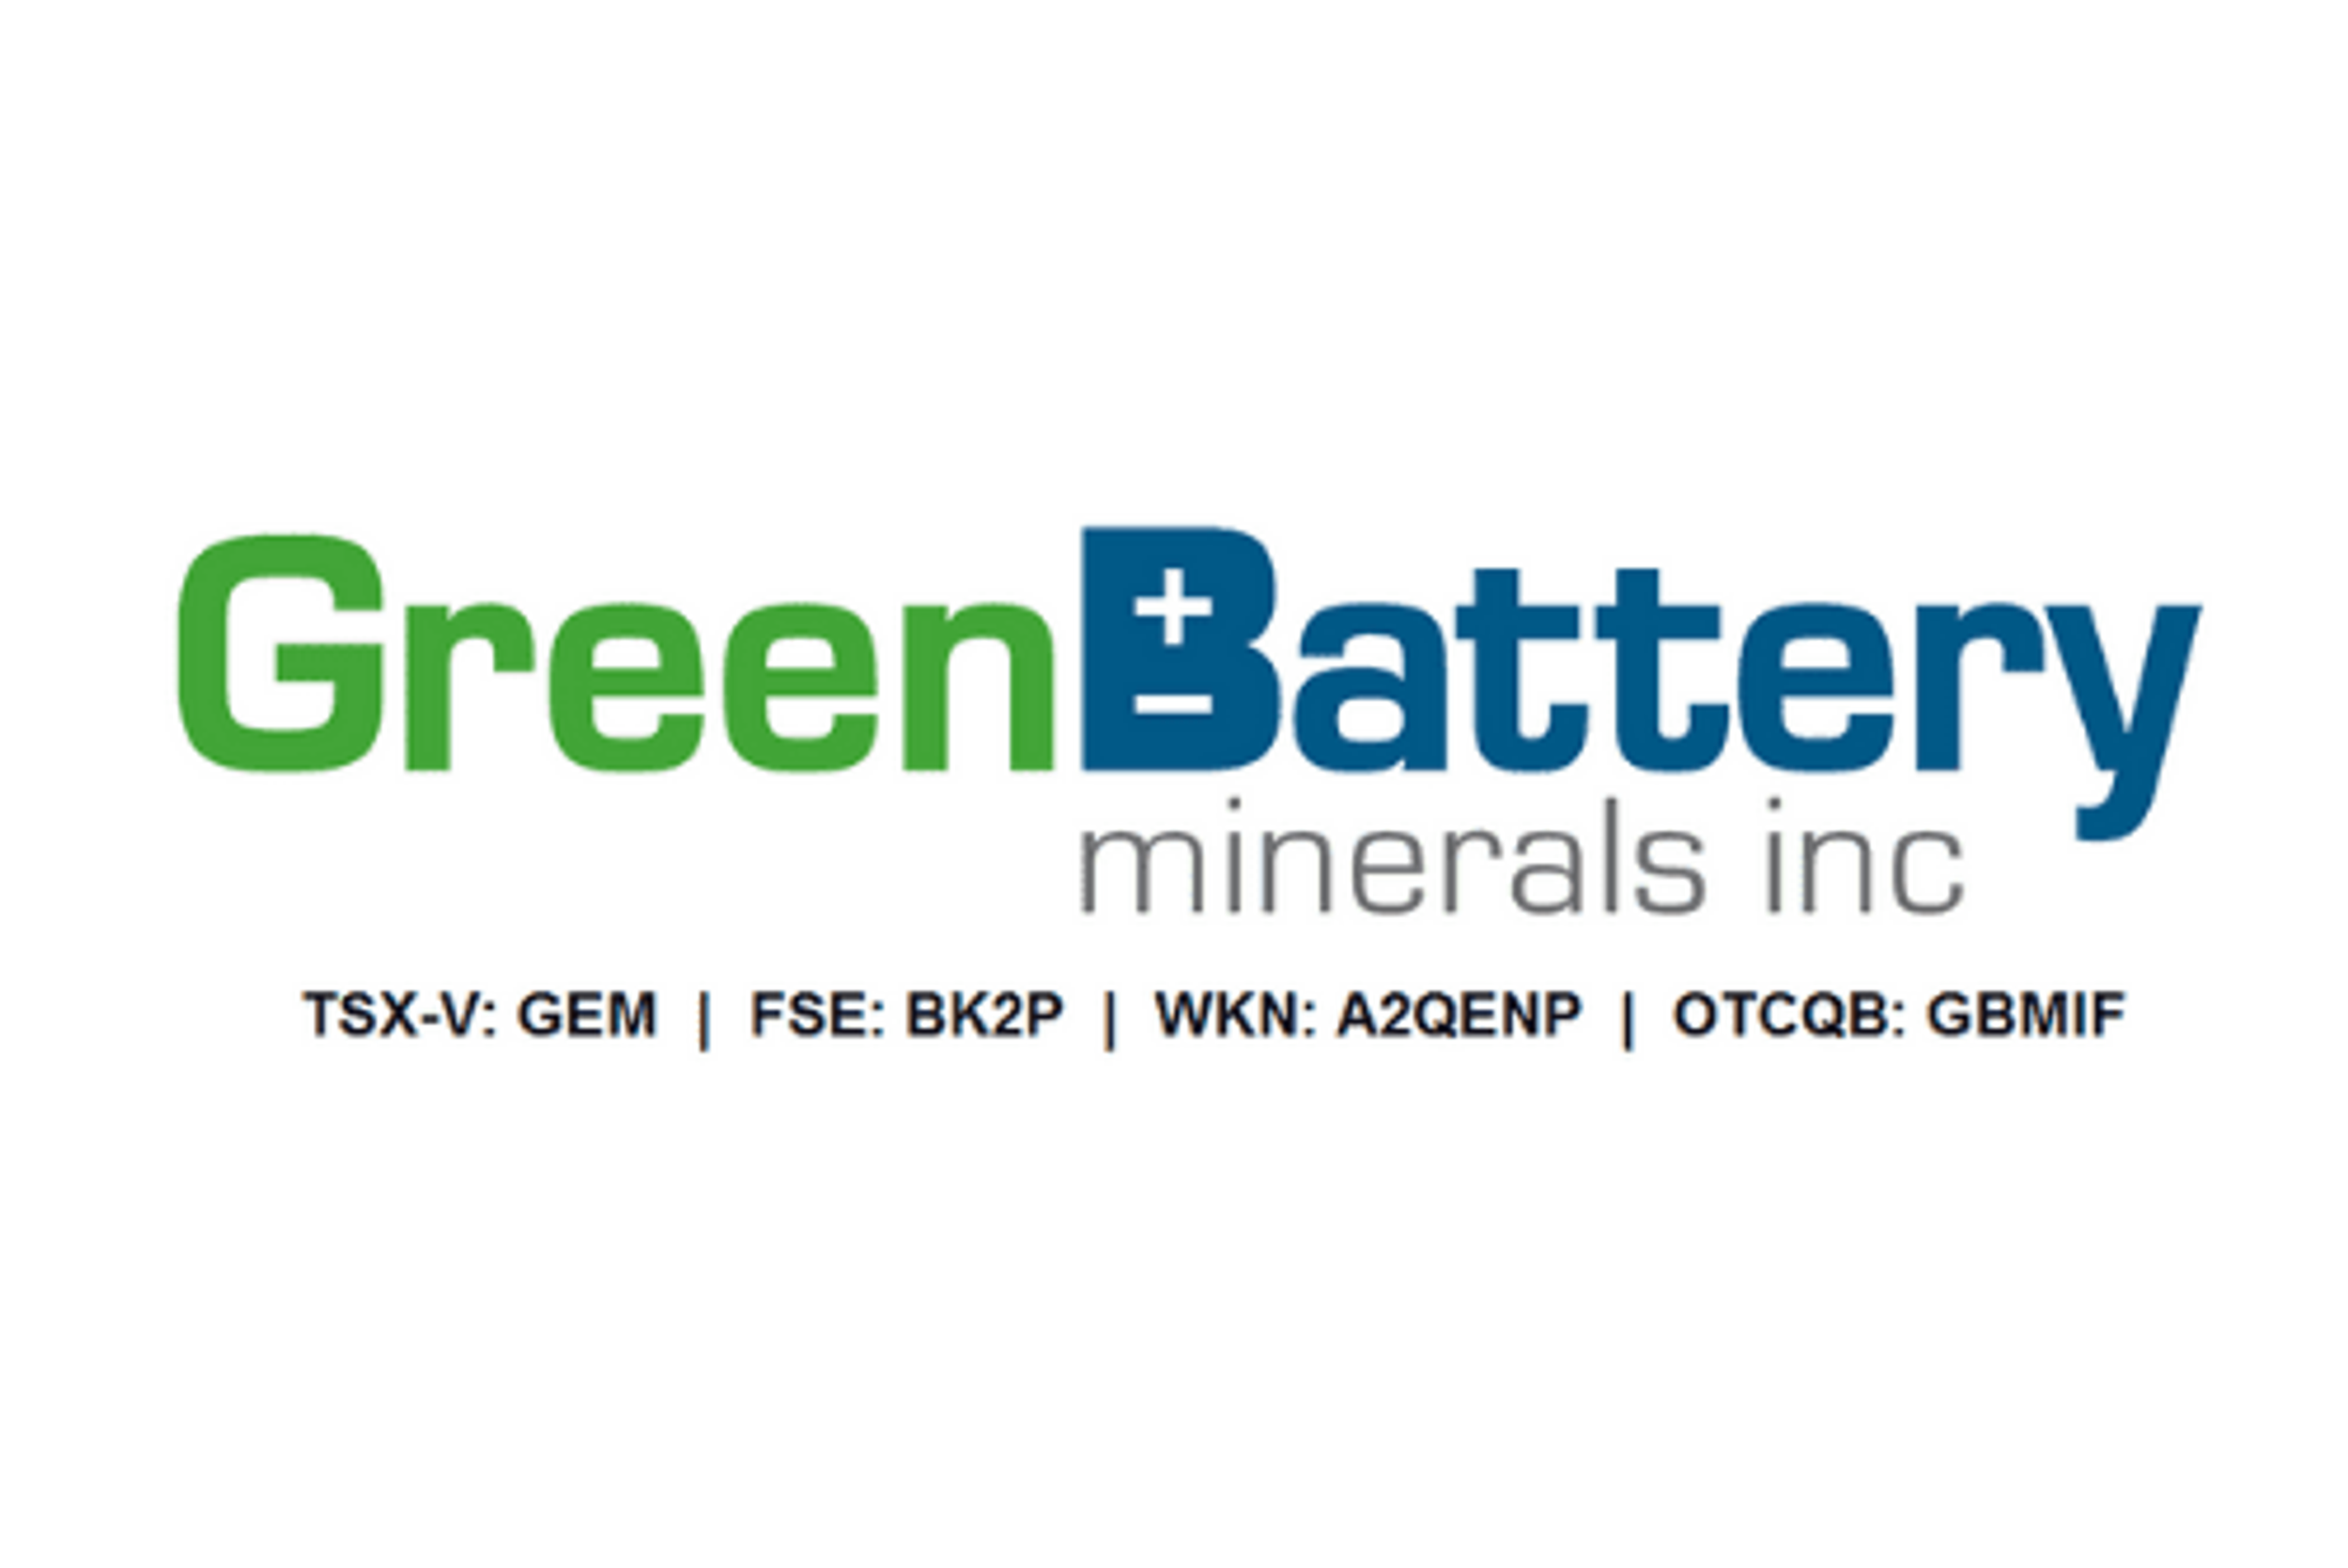 battery minerals